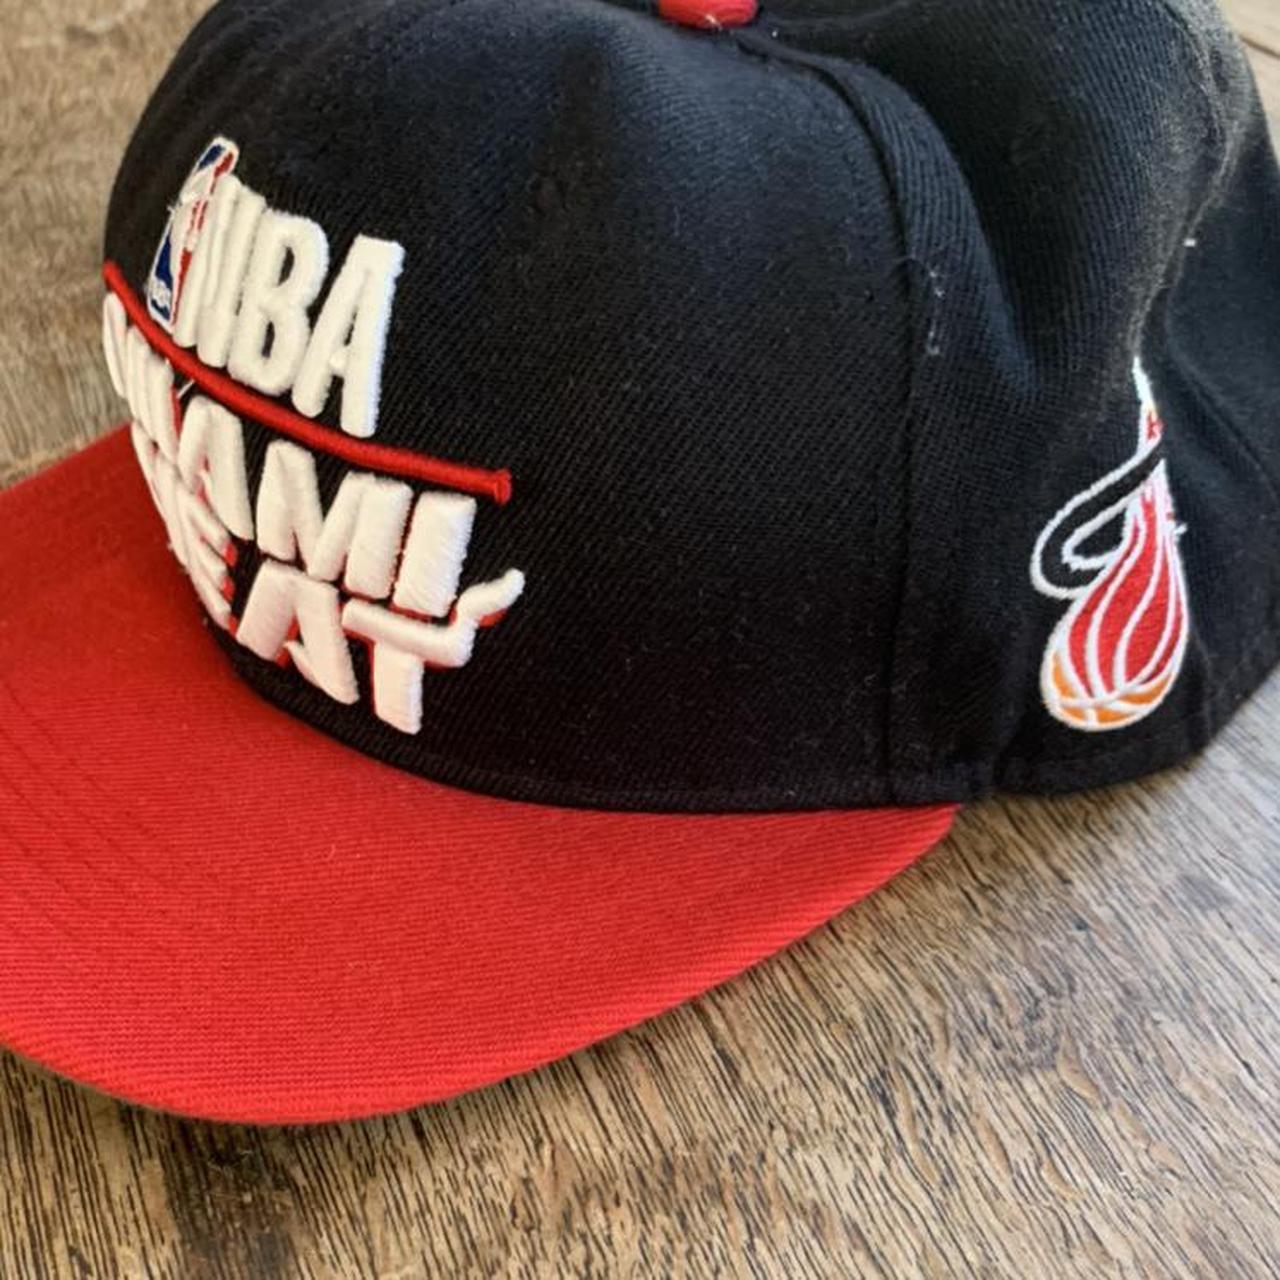 Product Image 2 - Miami Heat NBA cap

❤️‍🔥

#nba
#miamiheat
#mitchell&ness
#vintage